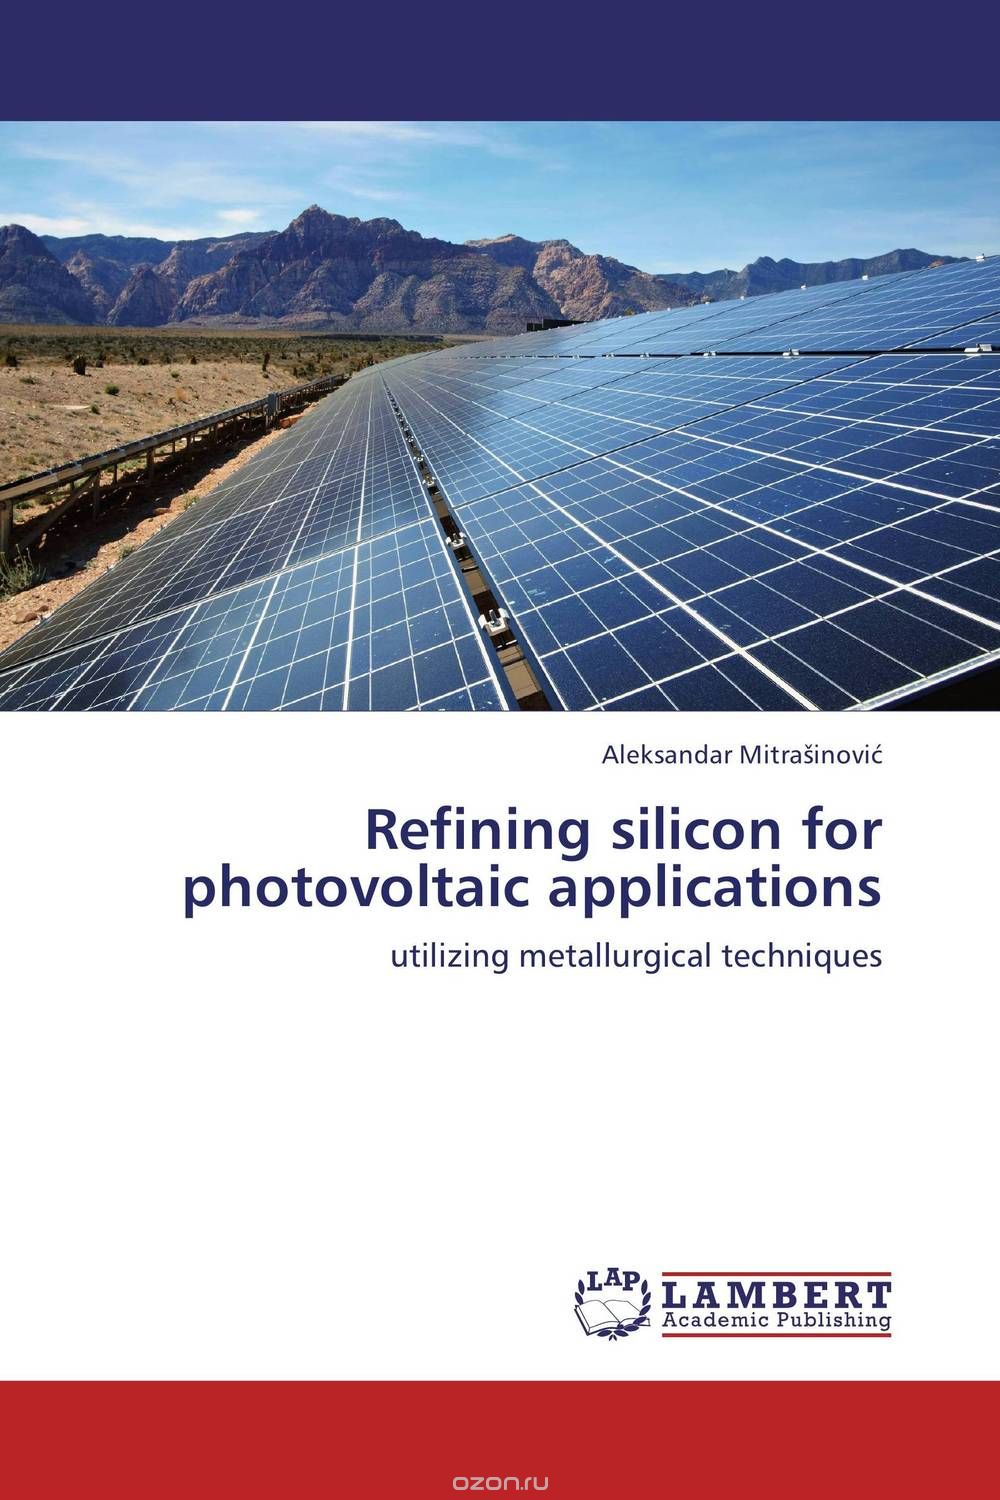 Скачать книгу "Refining silicon for photovoltaic applications"